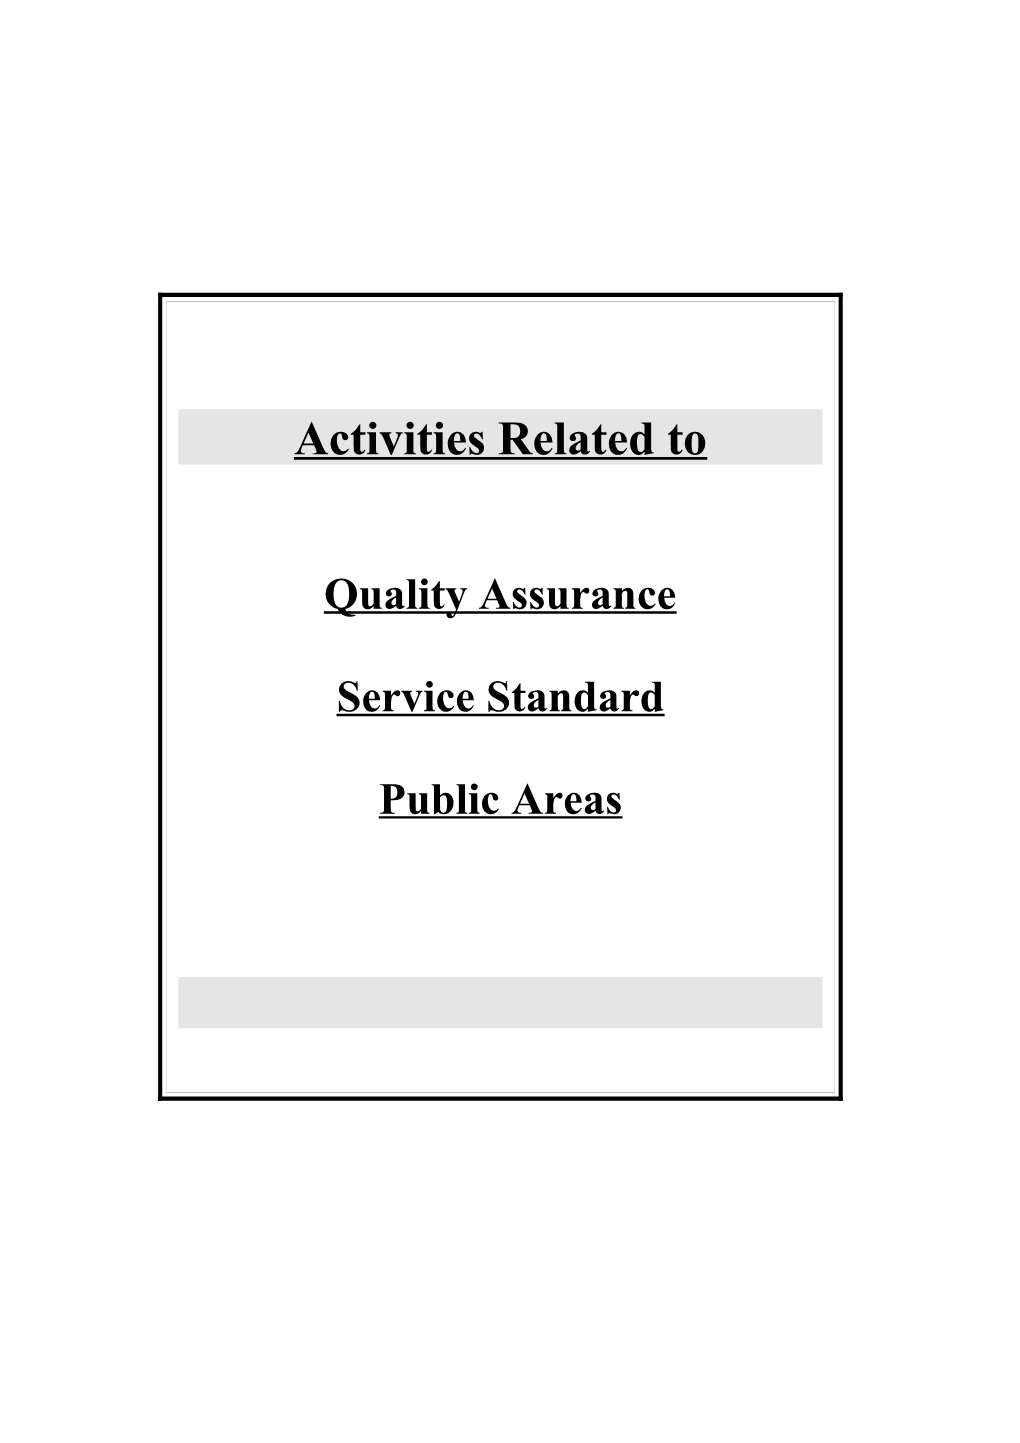 Quality Assurance & Service Standards